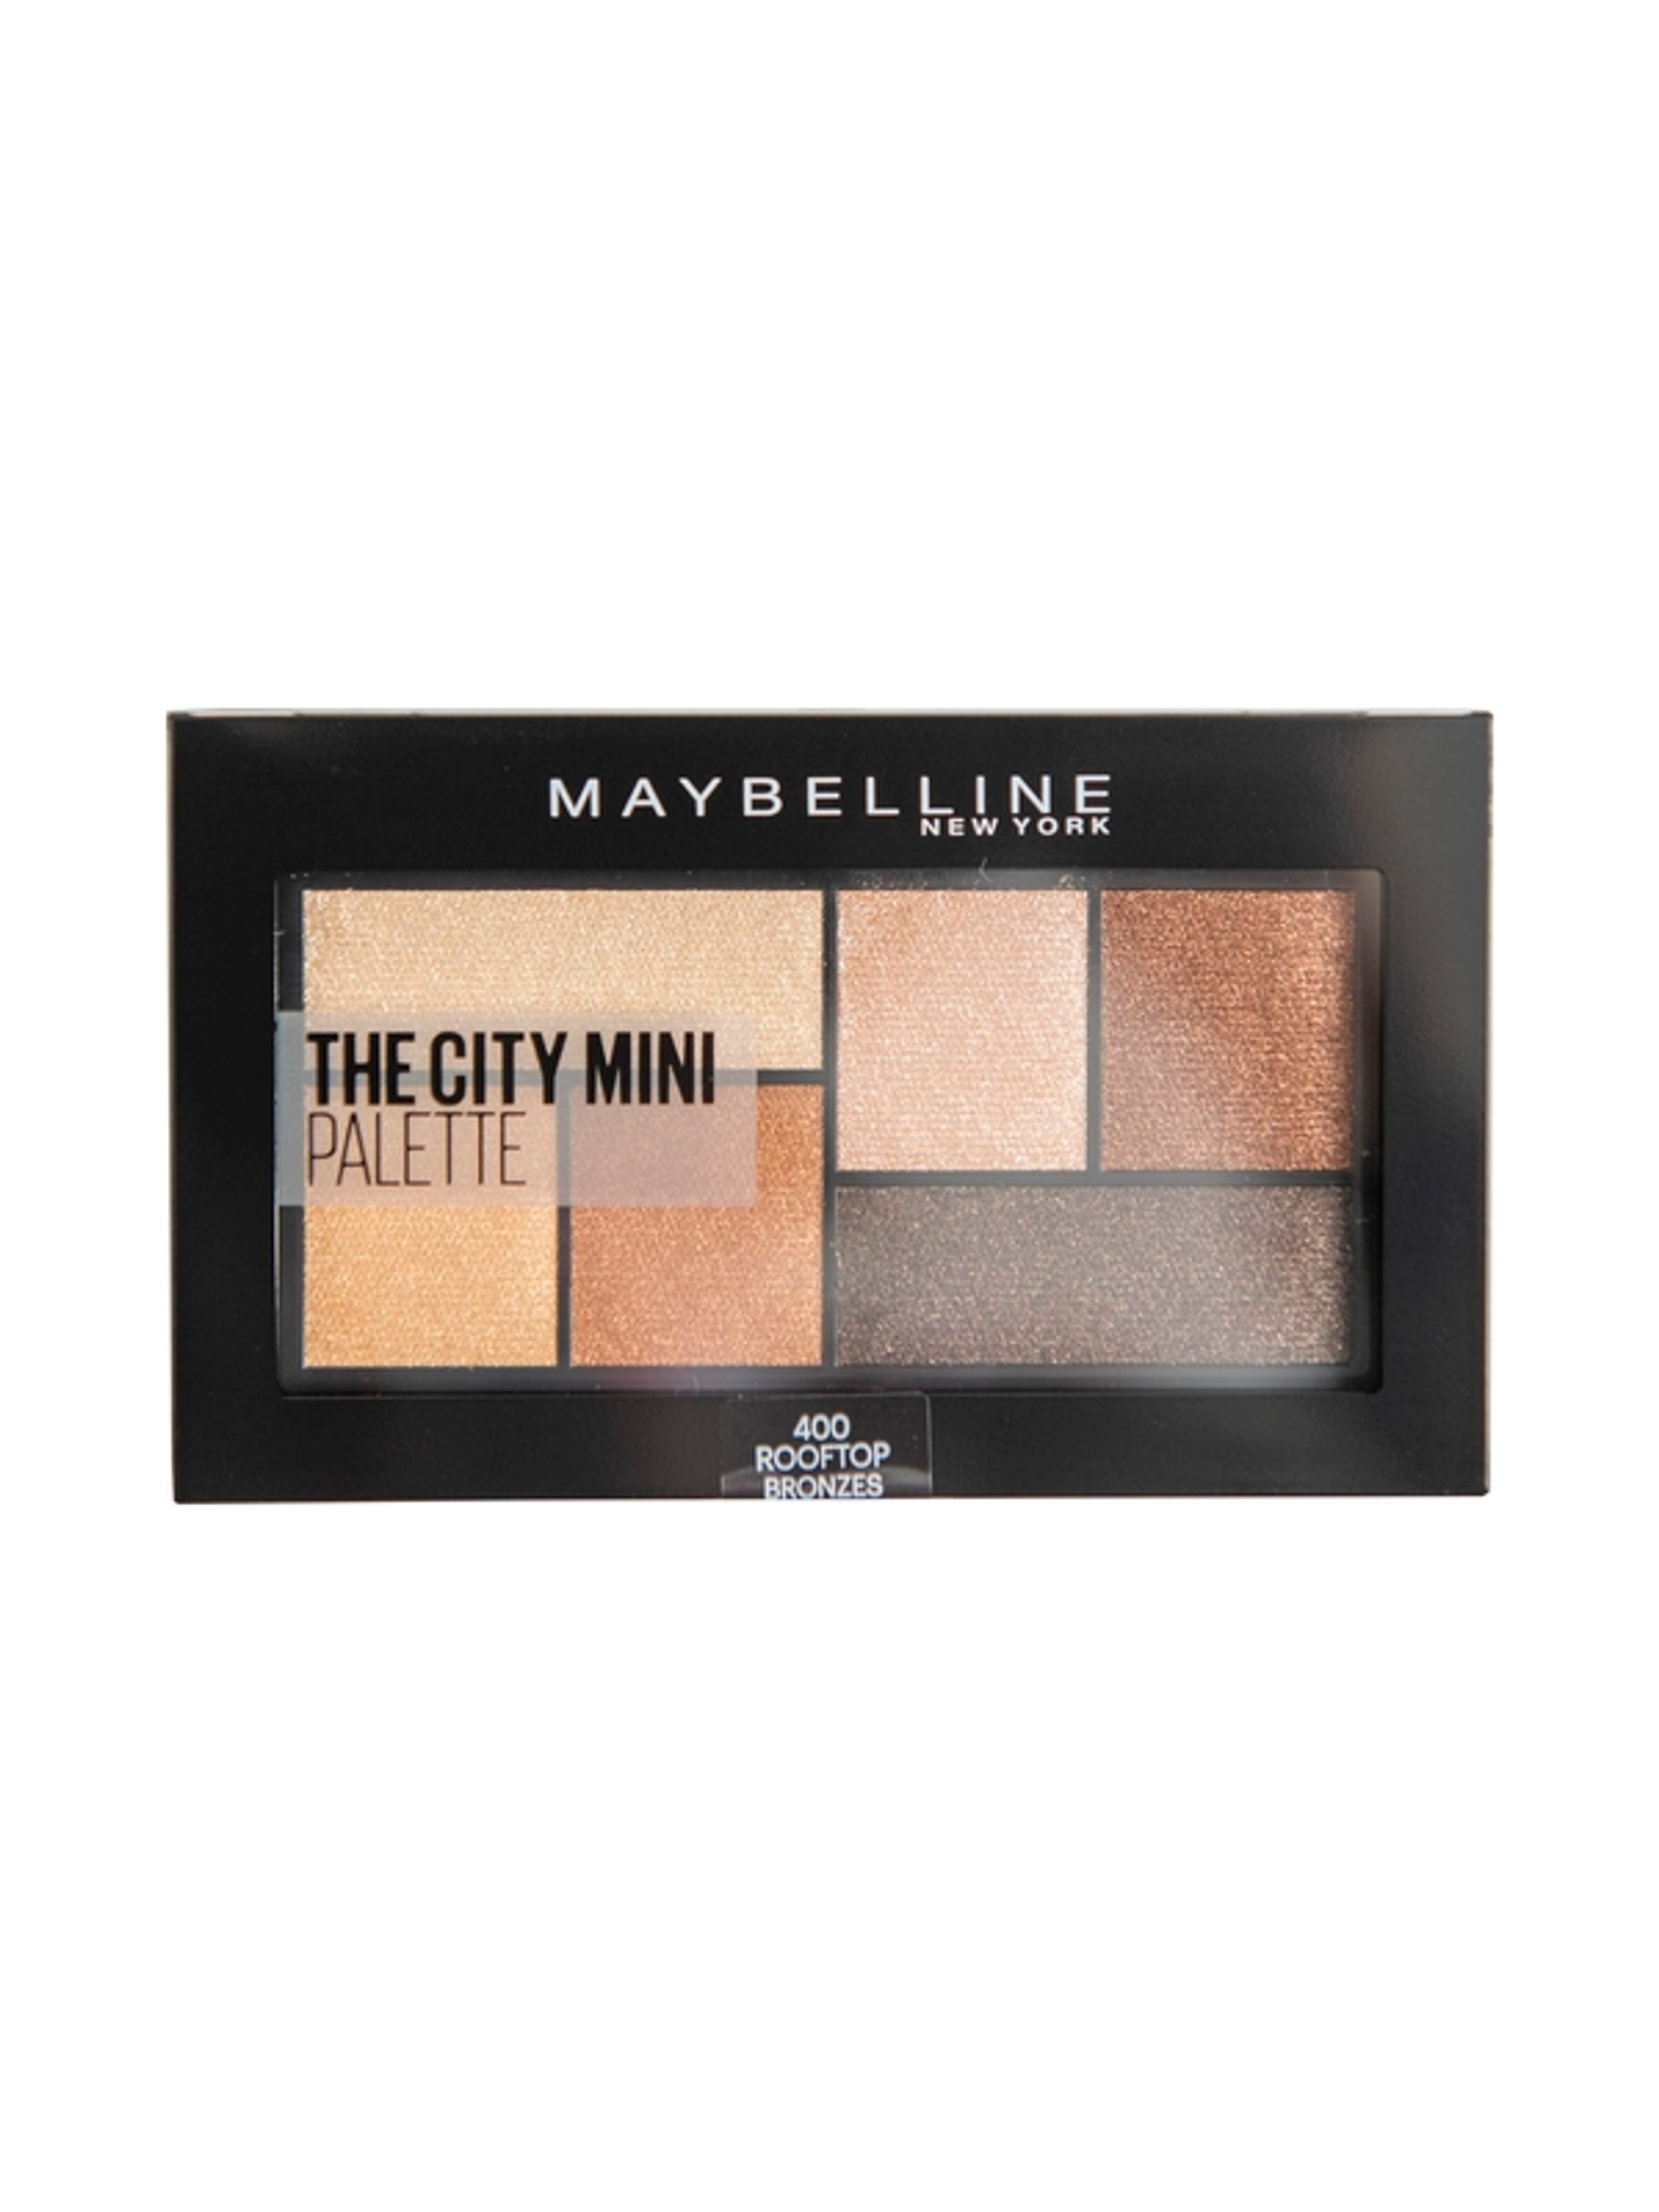 Maybelline The City Mini szemhéjpúder paletta /400 Rooftop Bronzers - 1 db